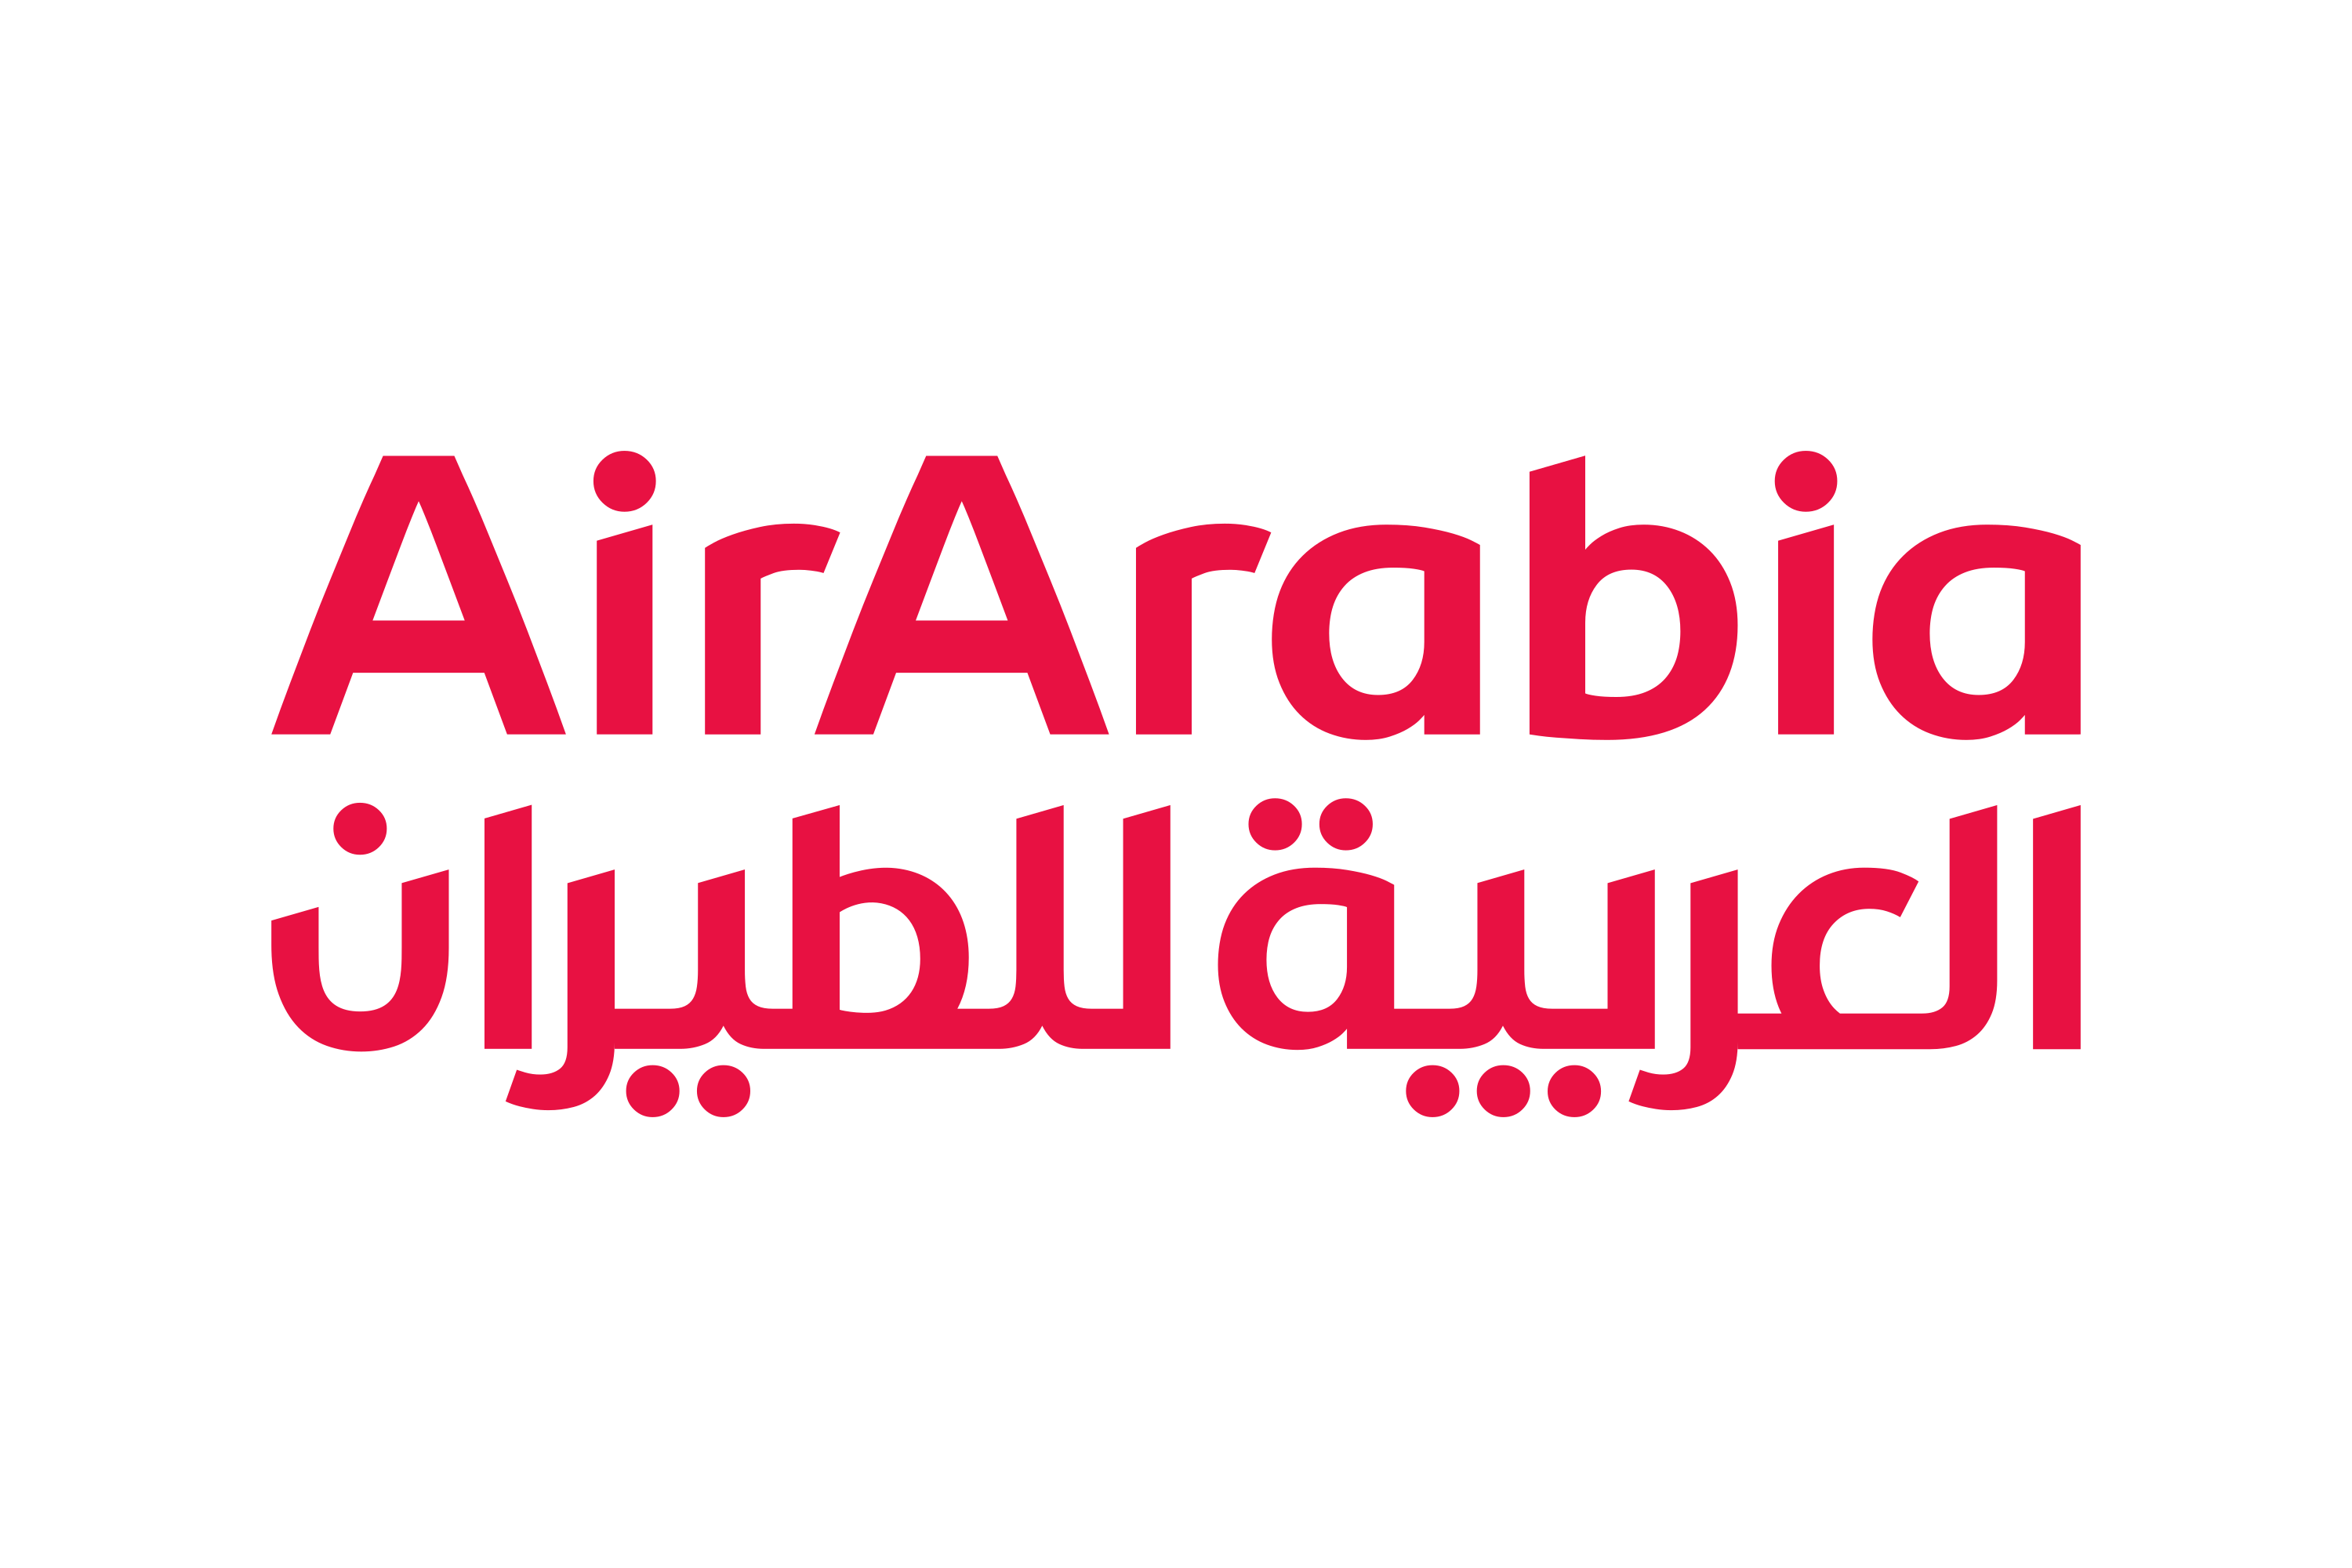 Download Air Arabia Logo In Svg Vector Or Png File Format Logo Wine